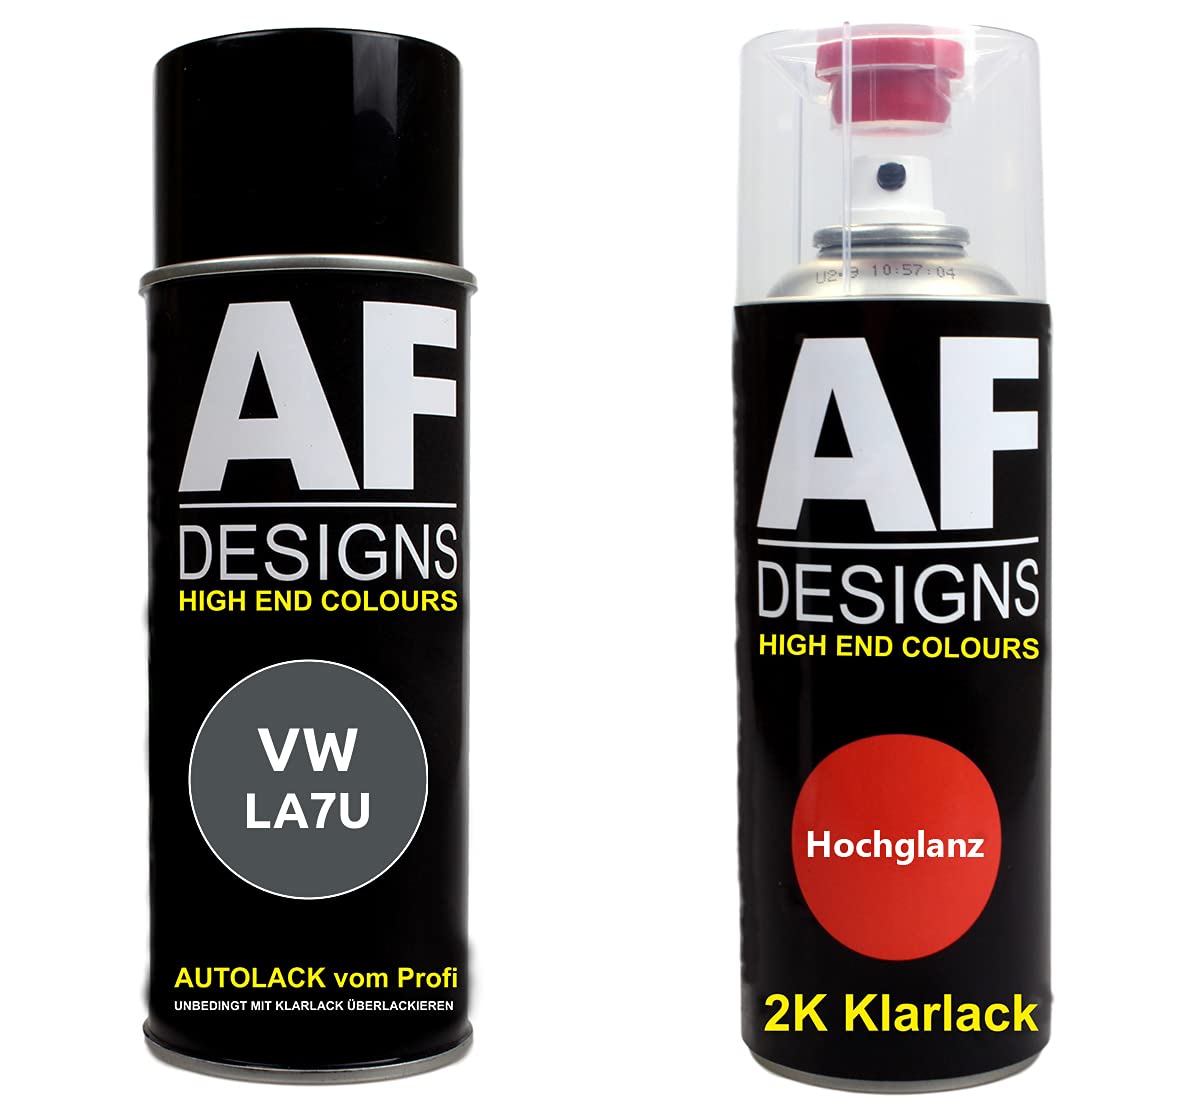 Alex Flittner Designs Autolack Spraydose Set für VW LA7U Pearlgrau Metallic 2K Klarlack Basislack Sprühdose Spraydosen 2x400ml von Alex Flittner Designs